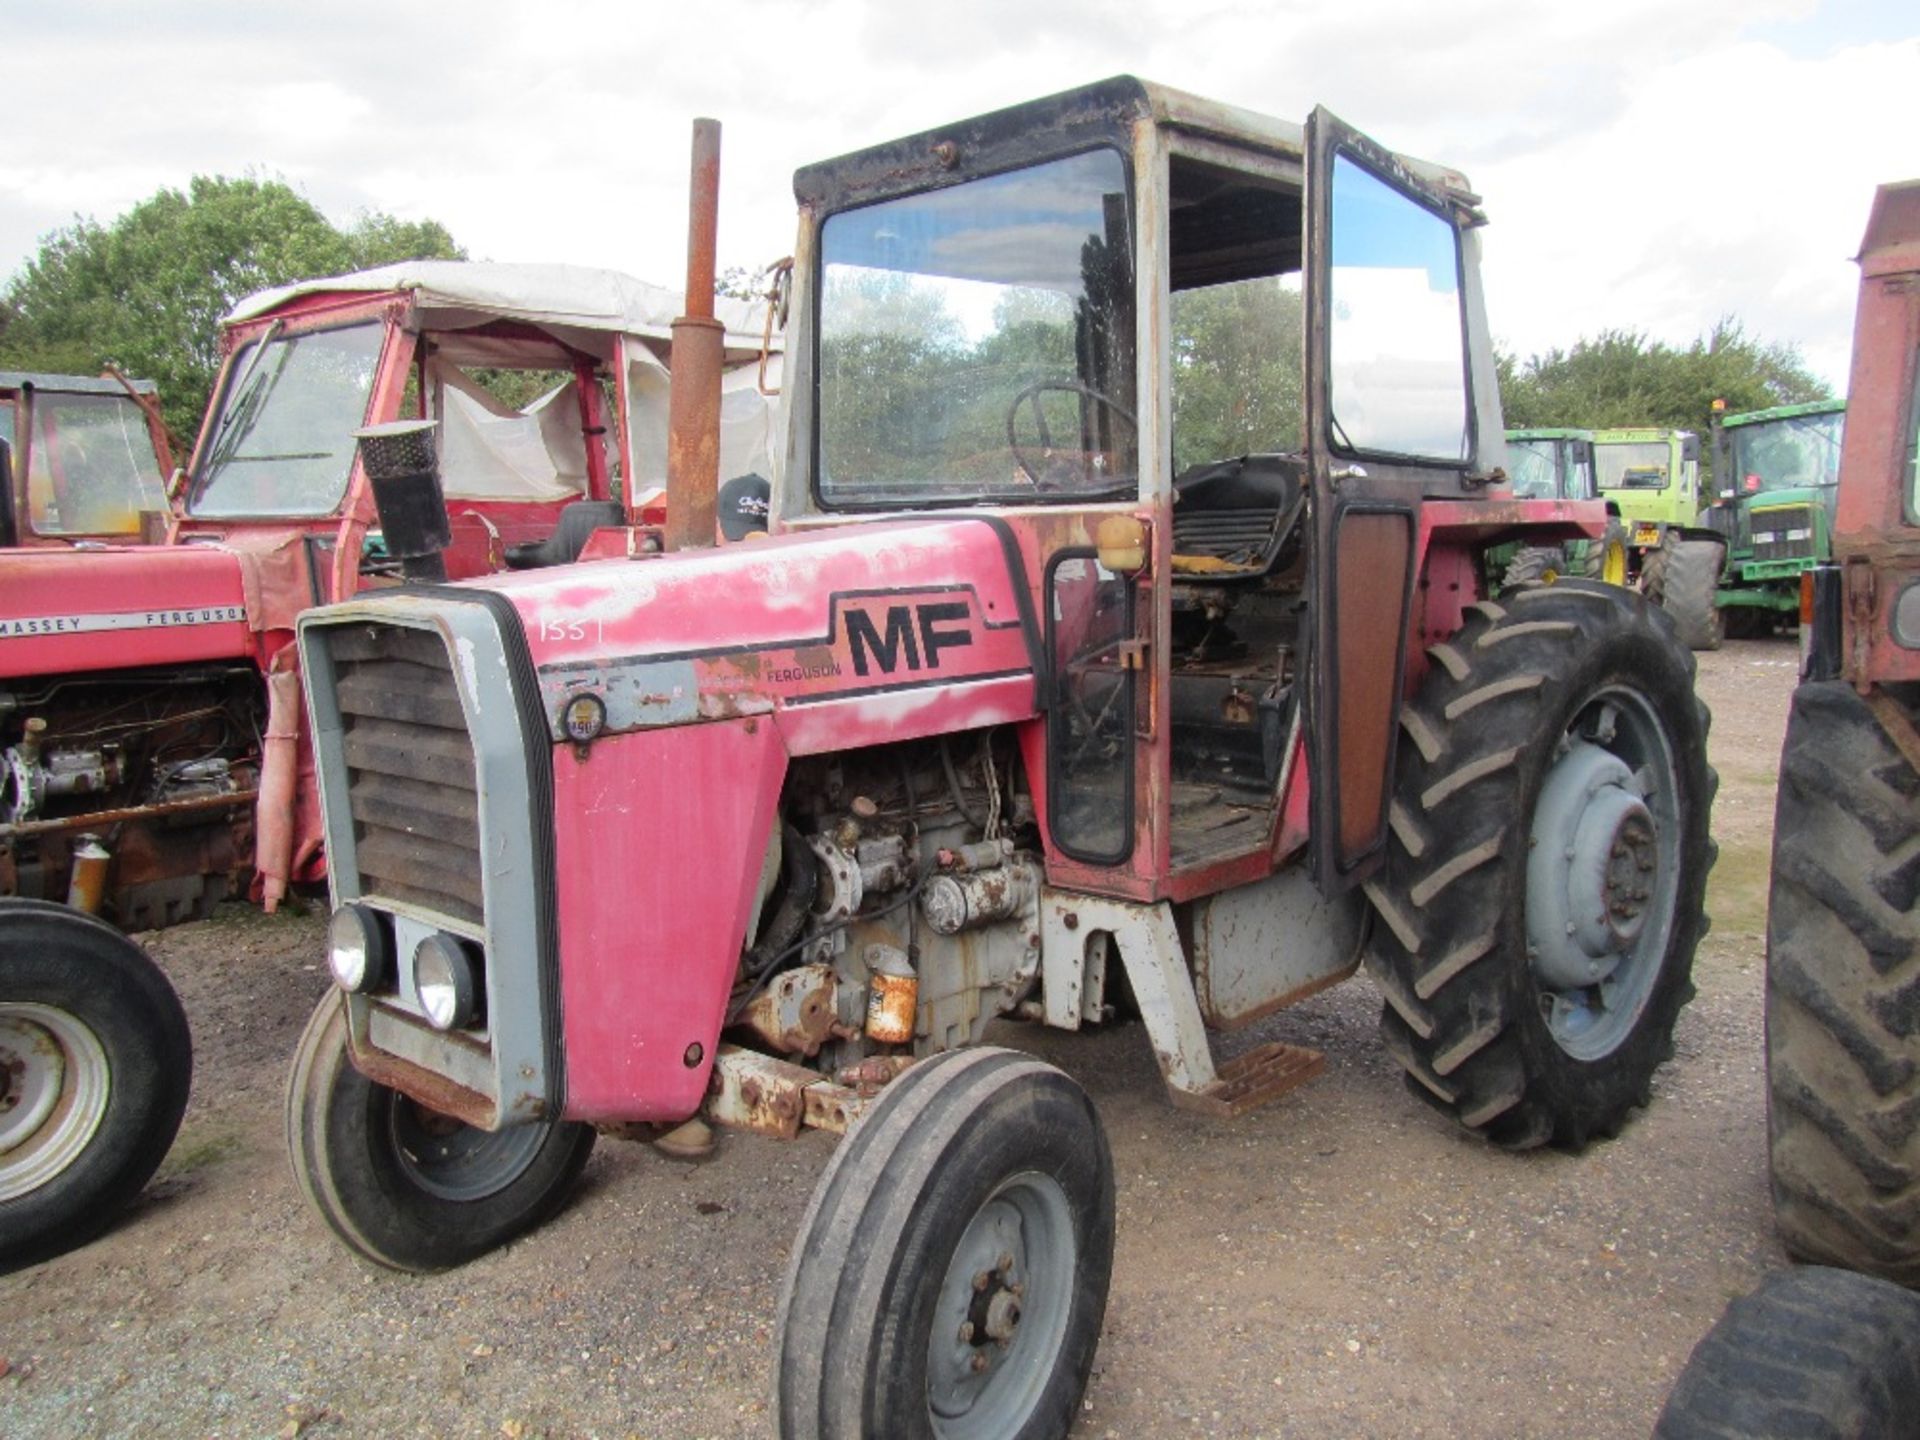 Massey Ferguson 590 Tractor